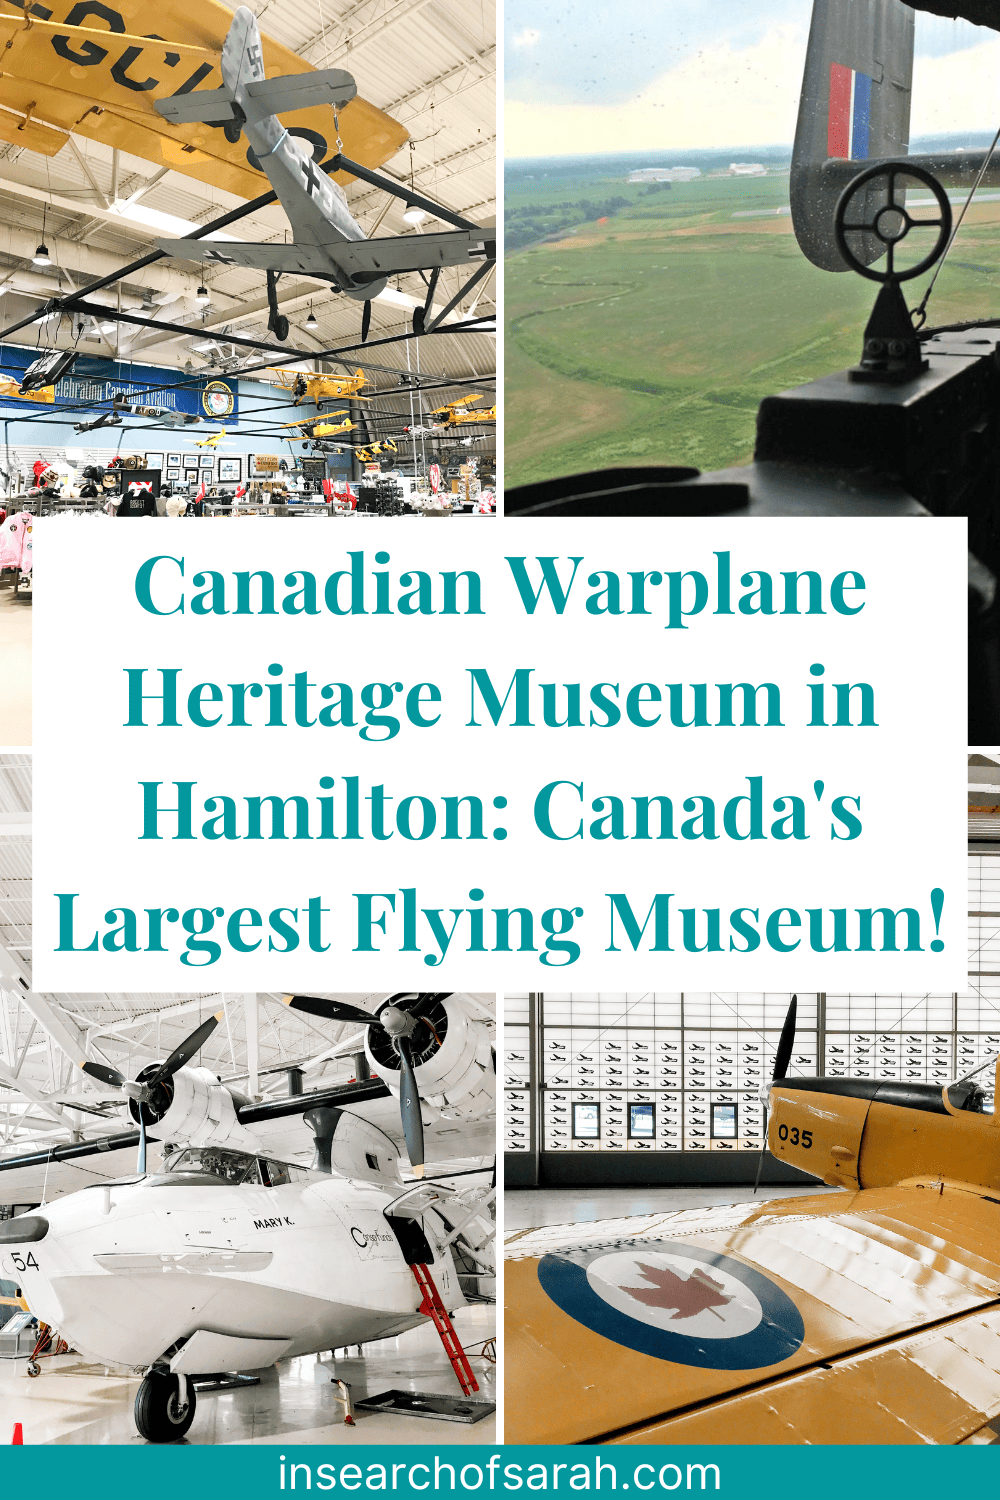 Canadian warplane heritage museum